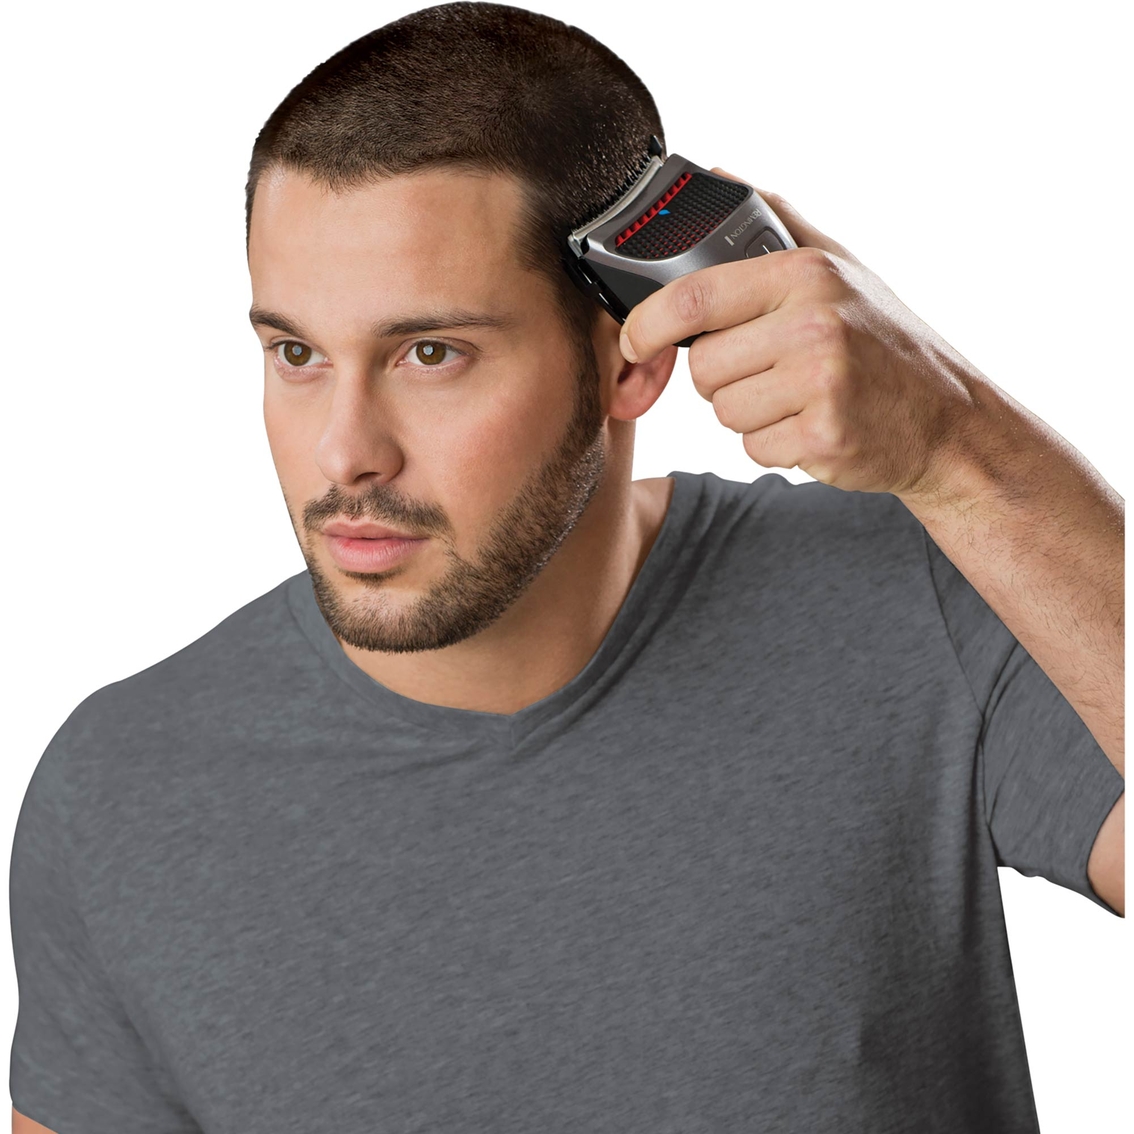 Remington Shortcut Clipper Pro Haircut Kit - Image 4 of 4